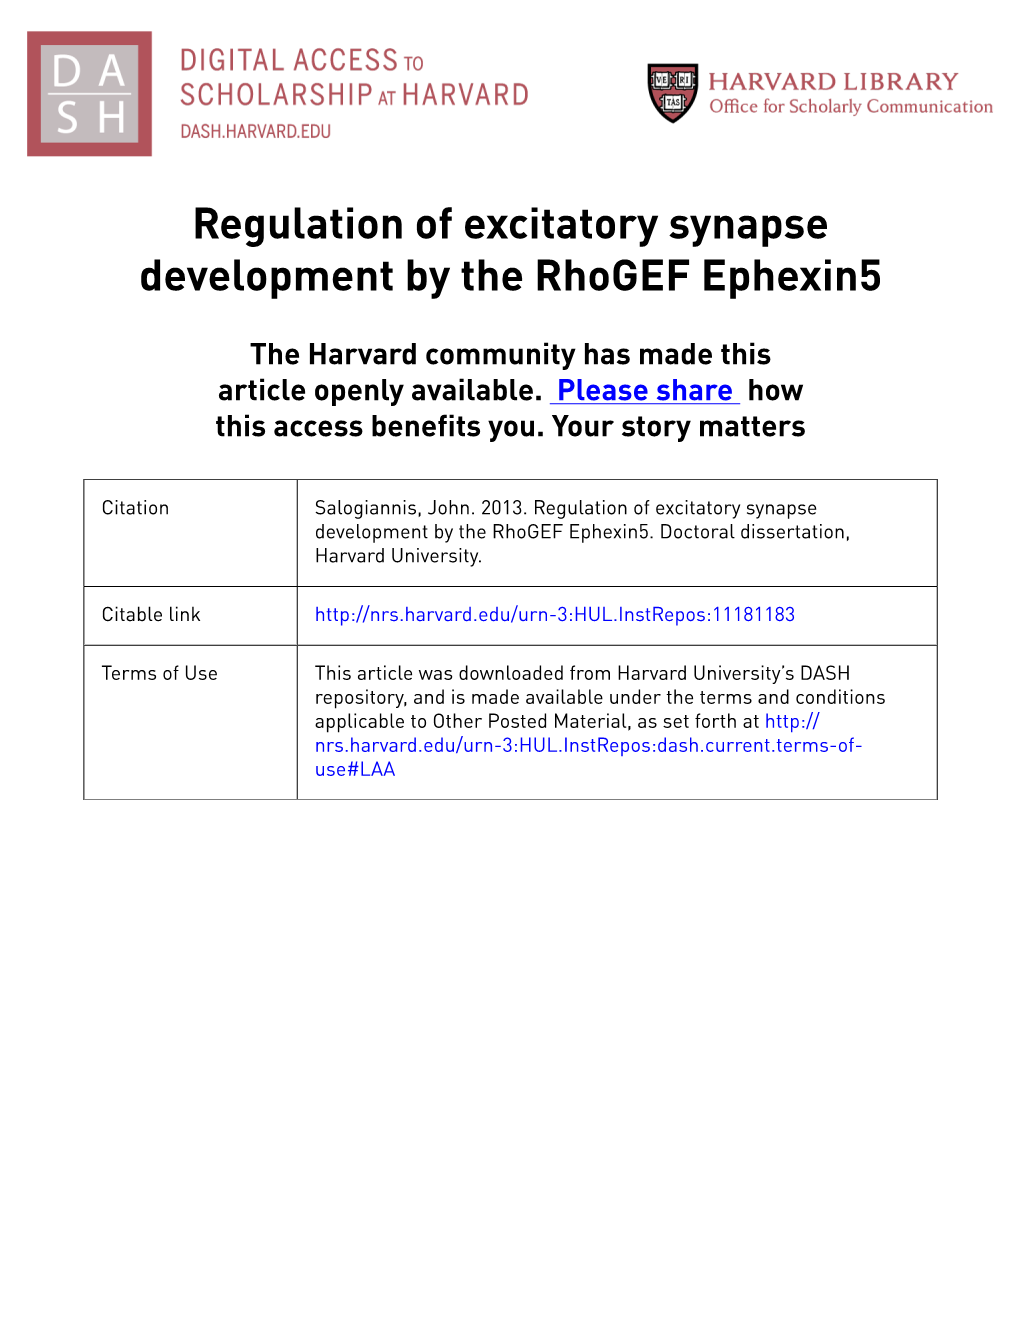 Regulation of Excitatory Synapse Development by the Rhogef Ephexin5